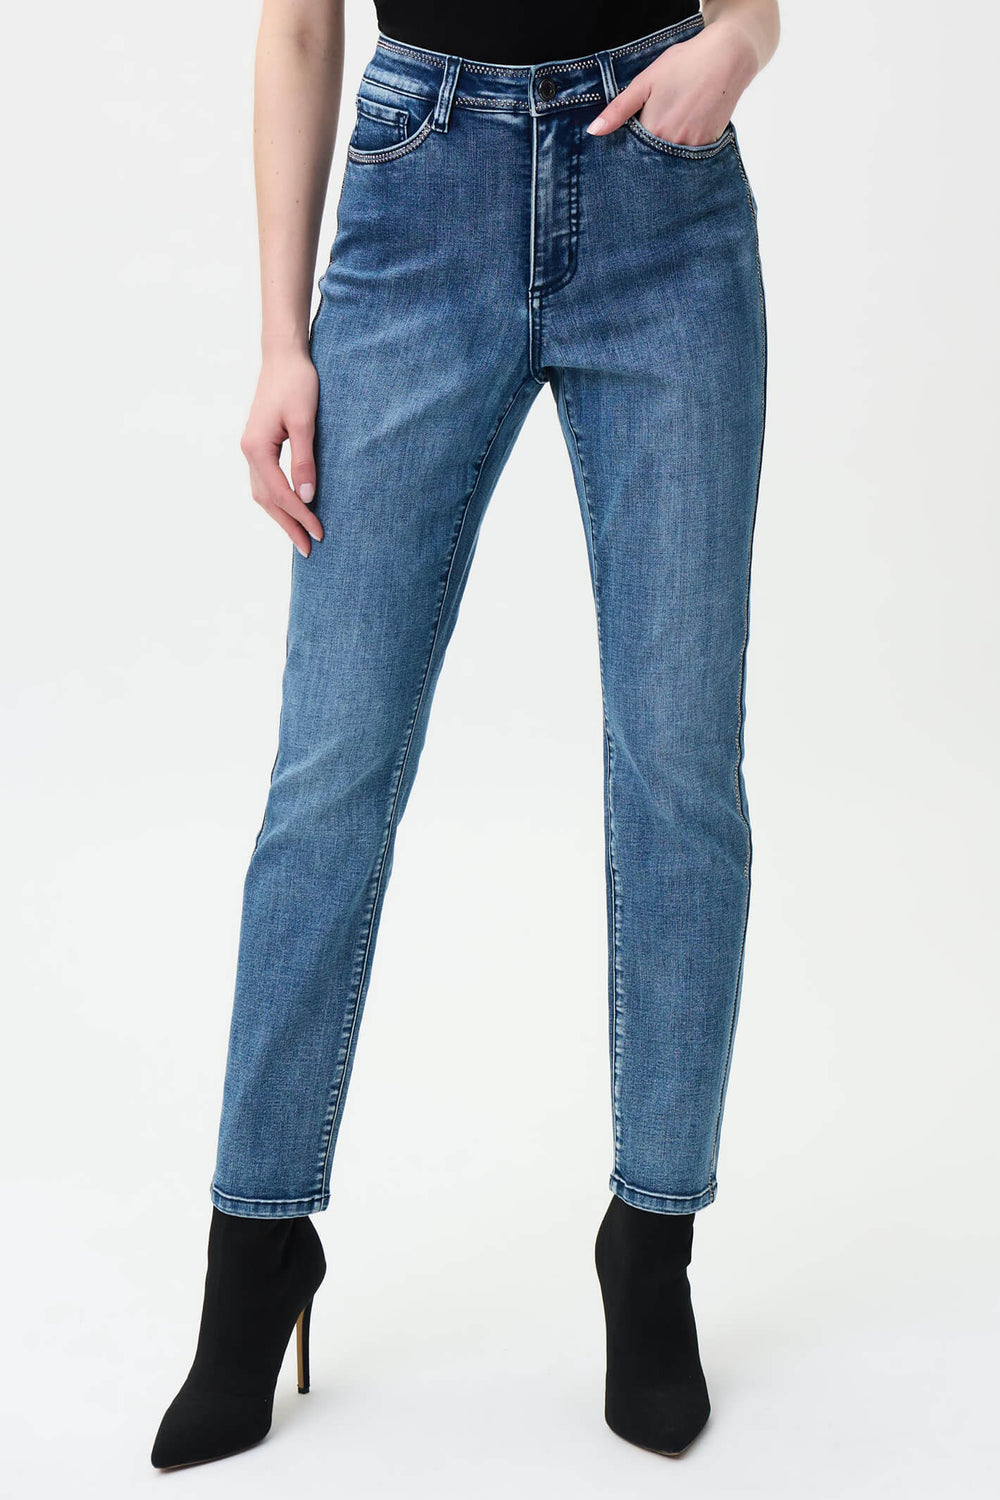 Joseph Ribkoff 224954 Medium Blue Embellished Denim Jeans - Experience Boutique